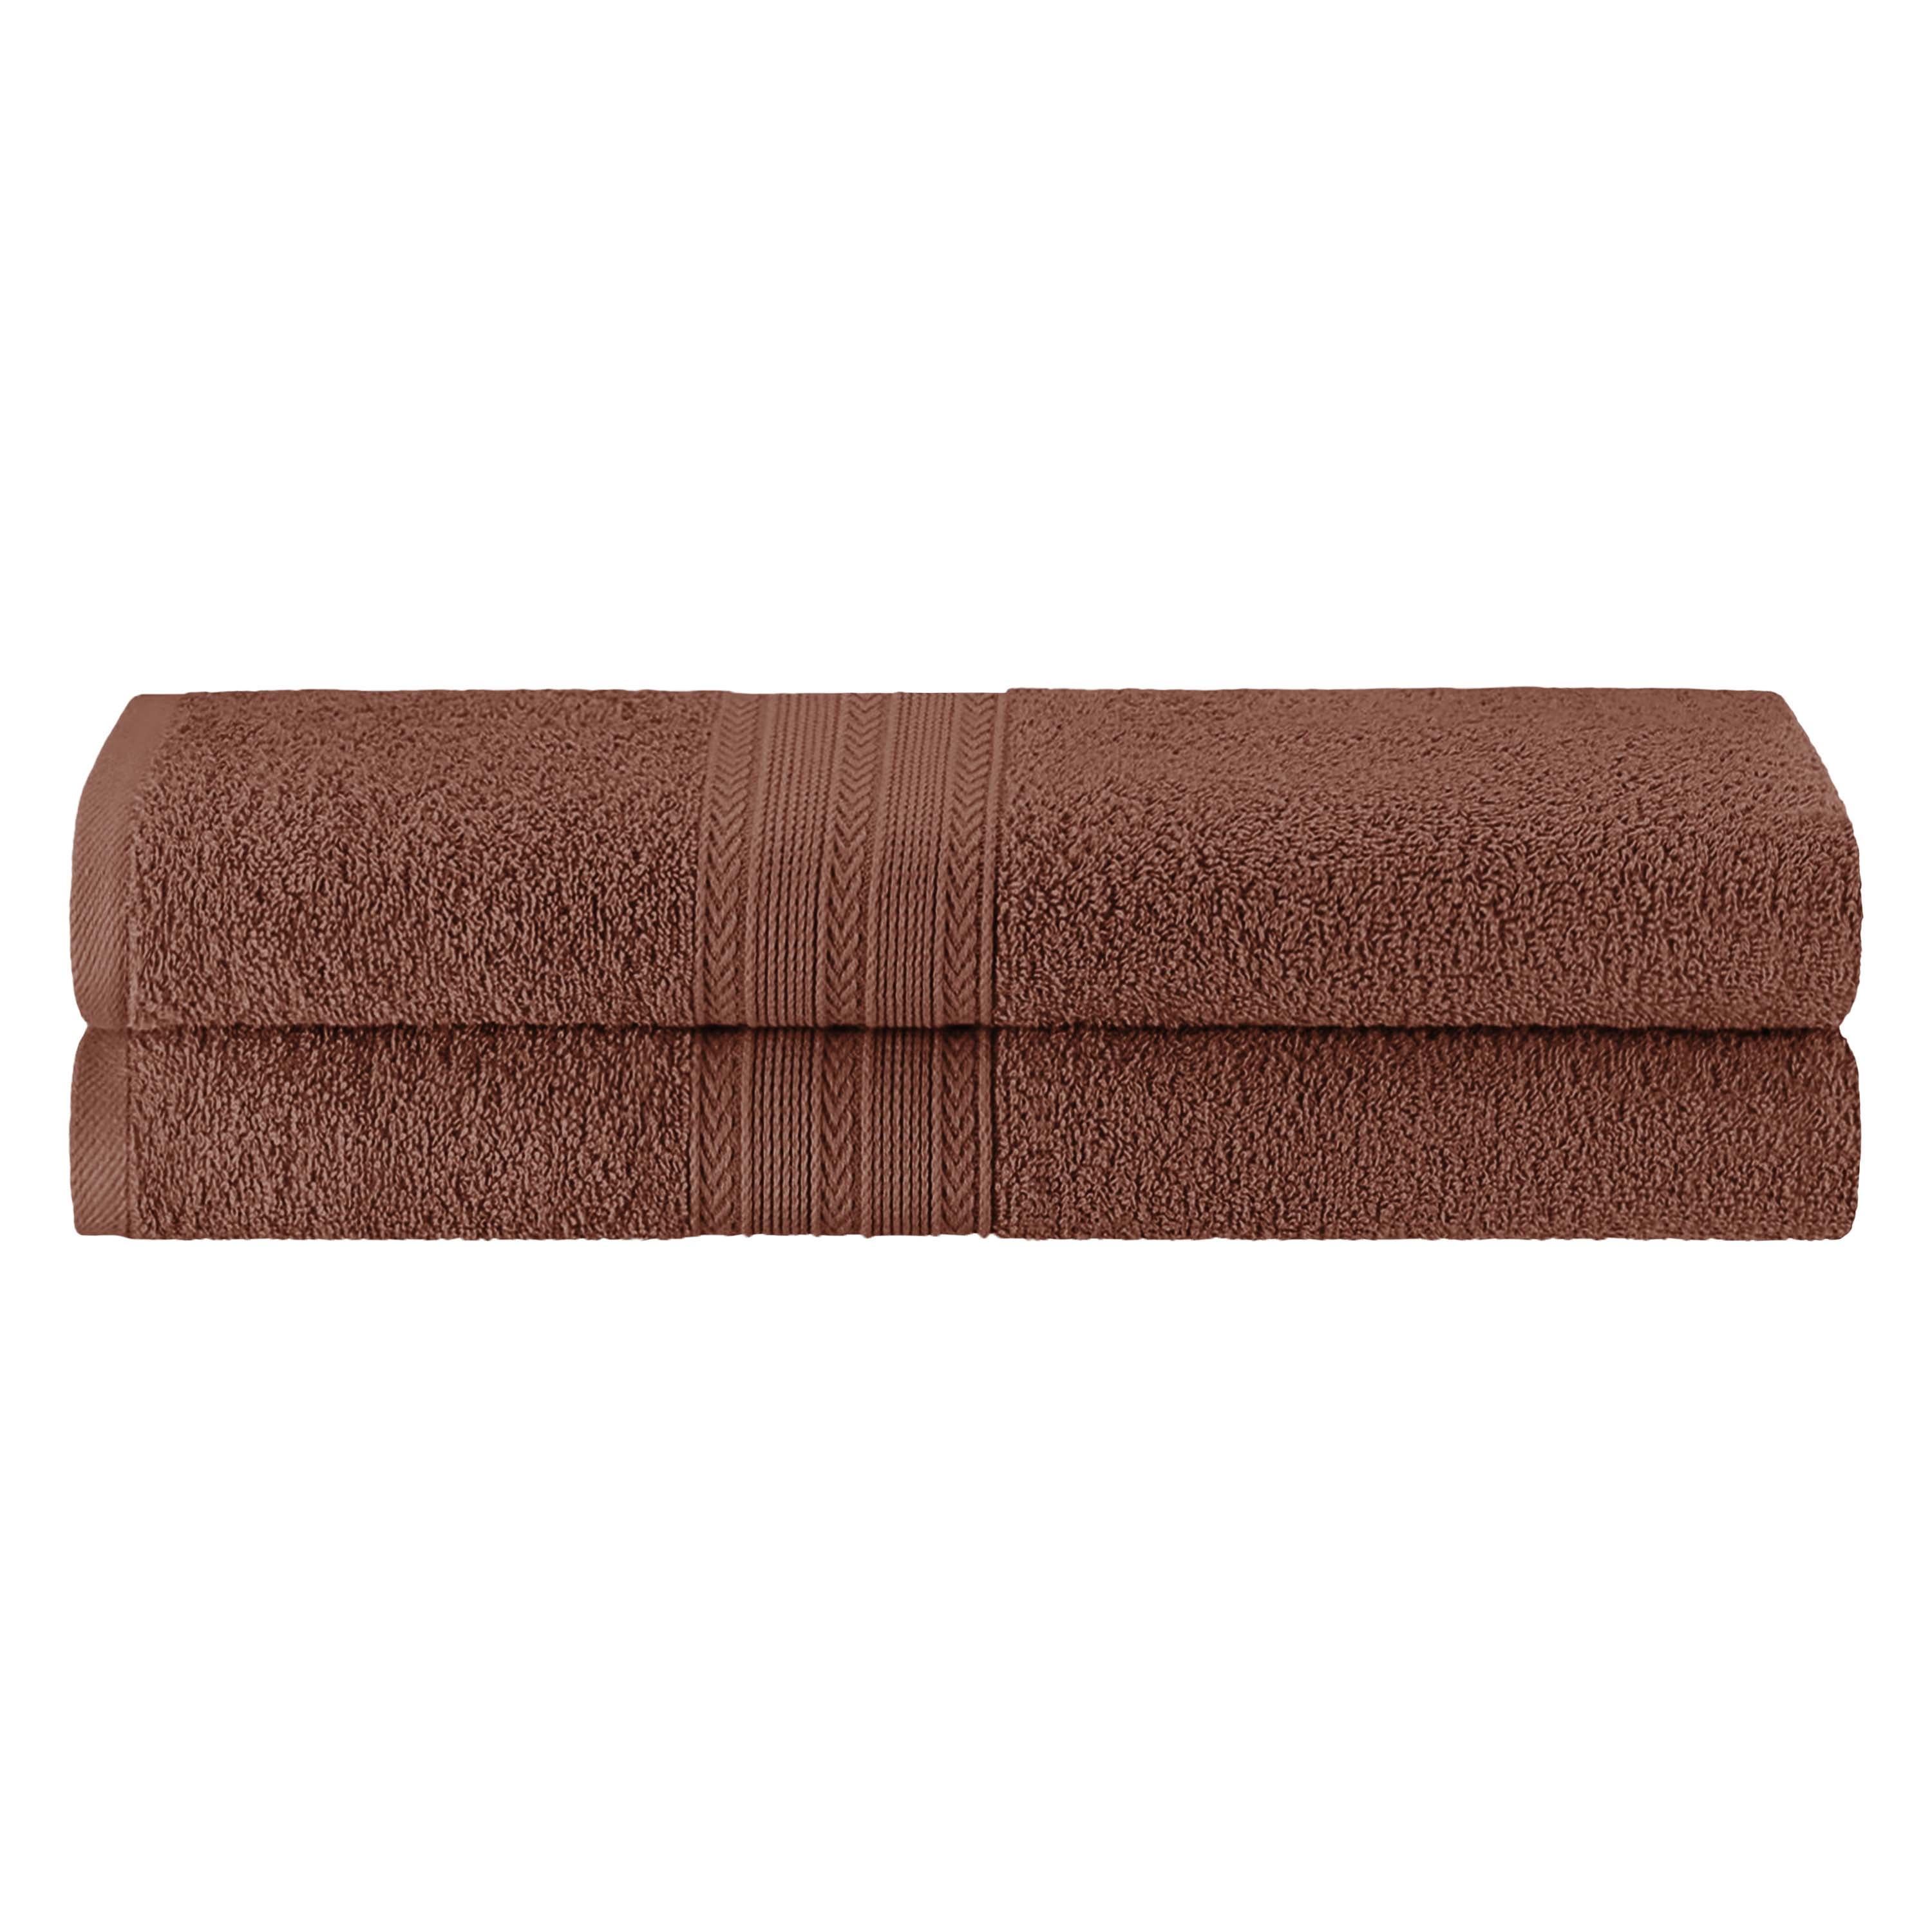 BNM Eco-Friendly Cotton Bath Towel Set of 4, Cranberry